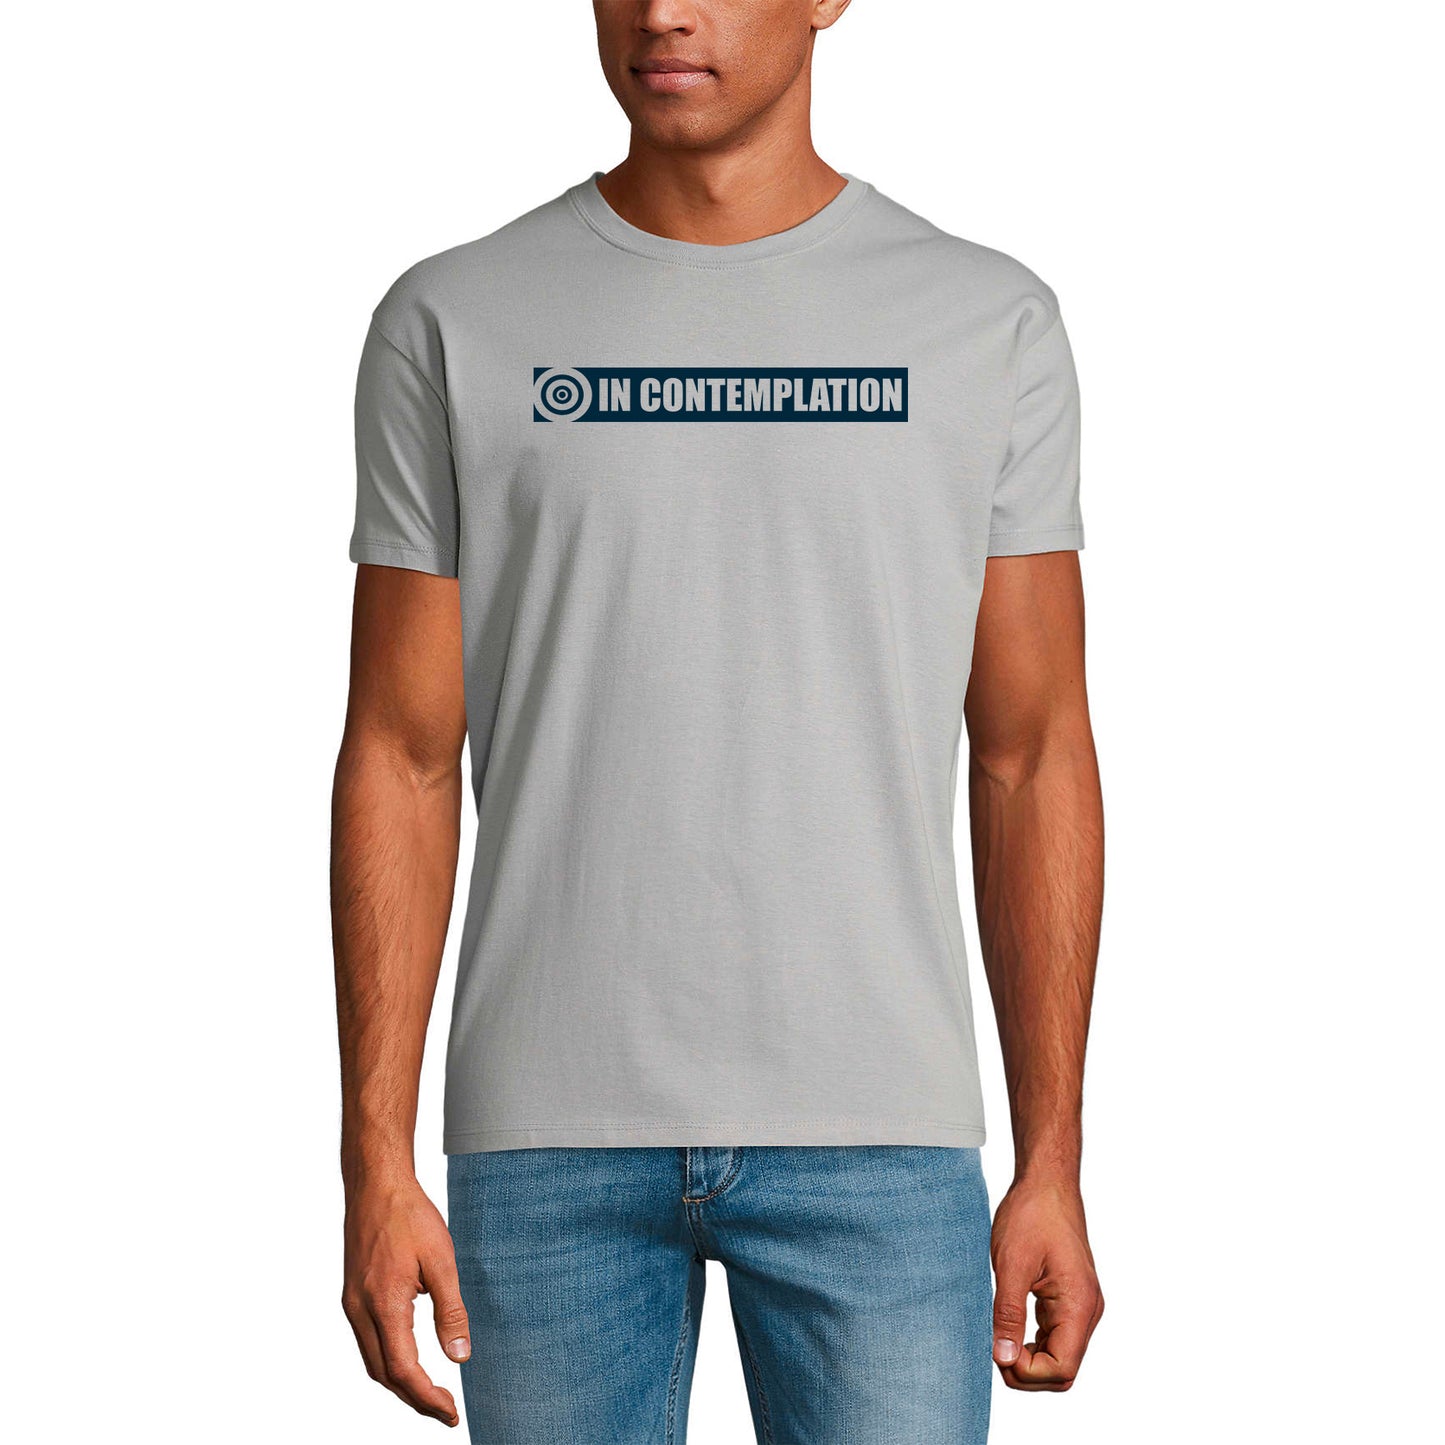 ULTRABASIC Men's Music T-Shirt In Contemplation - Slogan Shirt for Men